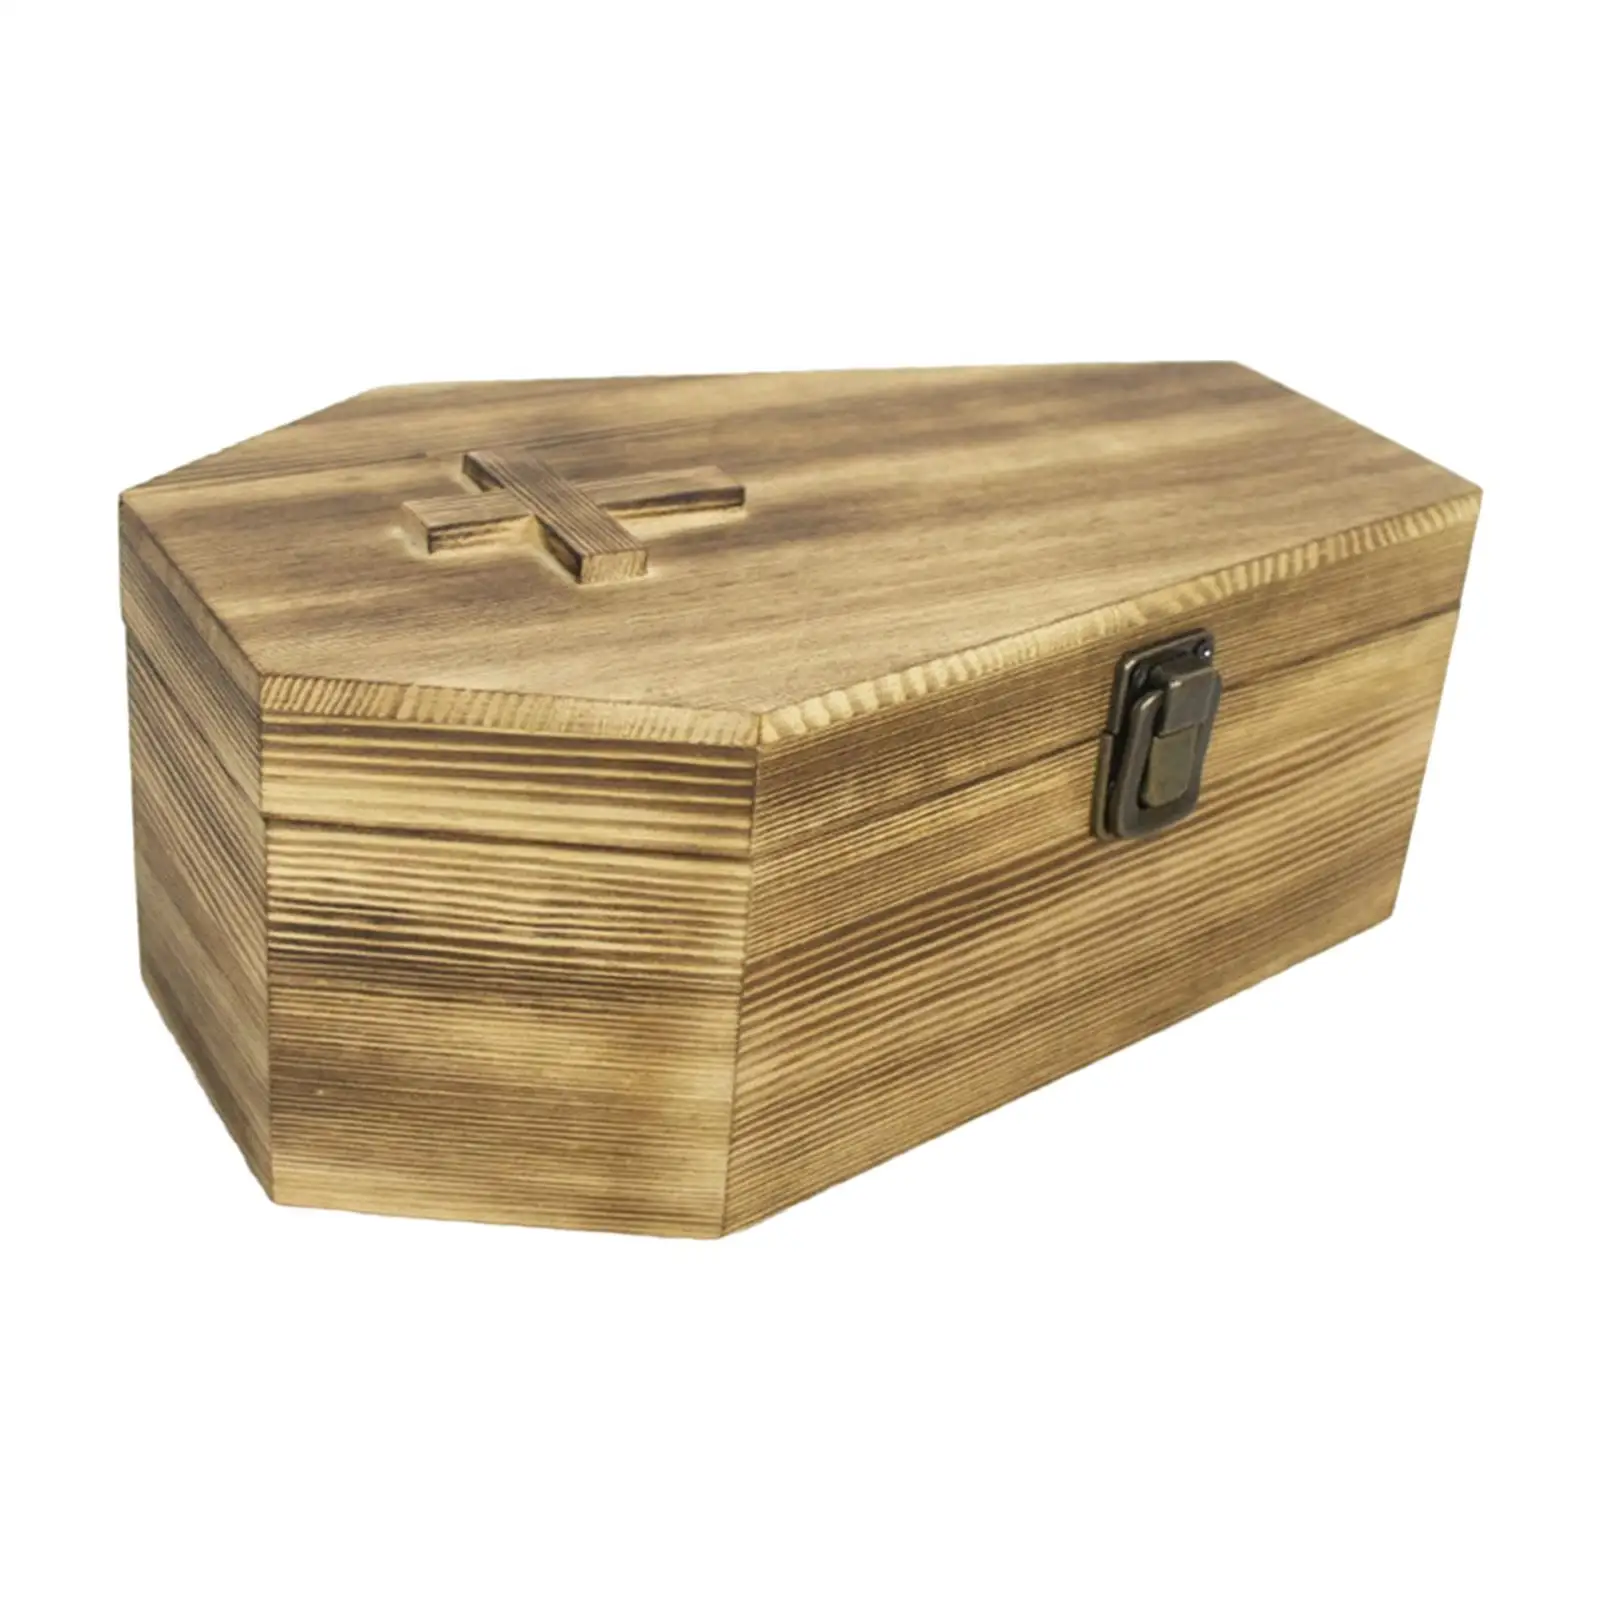 Wood Pet Urn Ash Urns for Dogs Memorial Keepsake Box Funeral Box Commemorate Elegant Precious Souvenirs for Small Animals